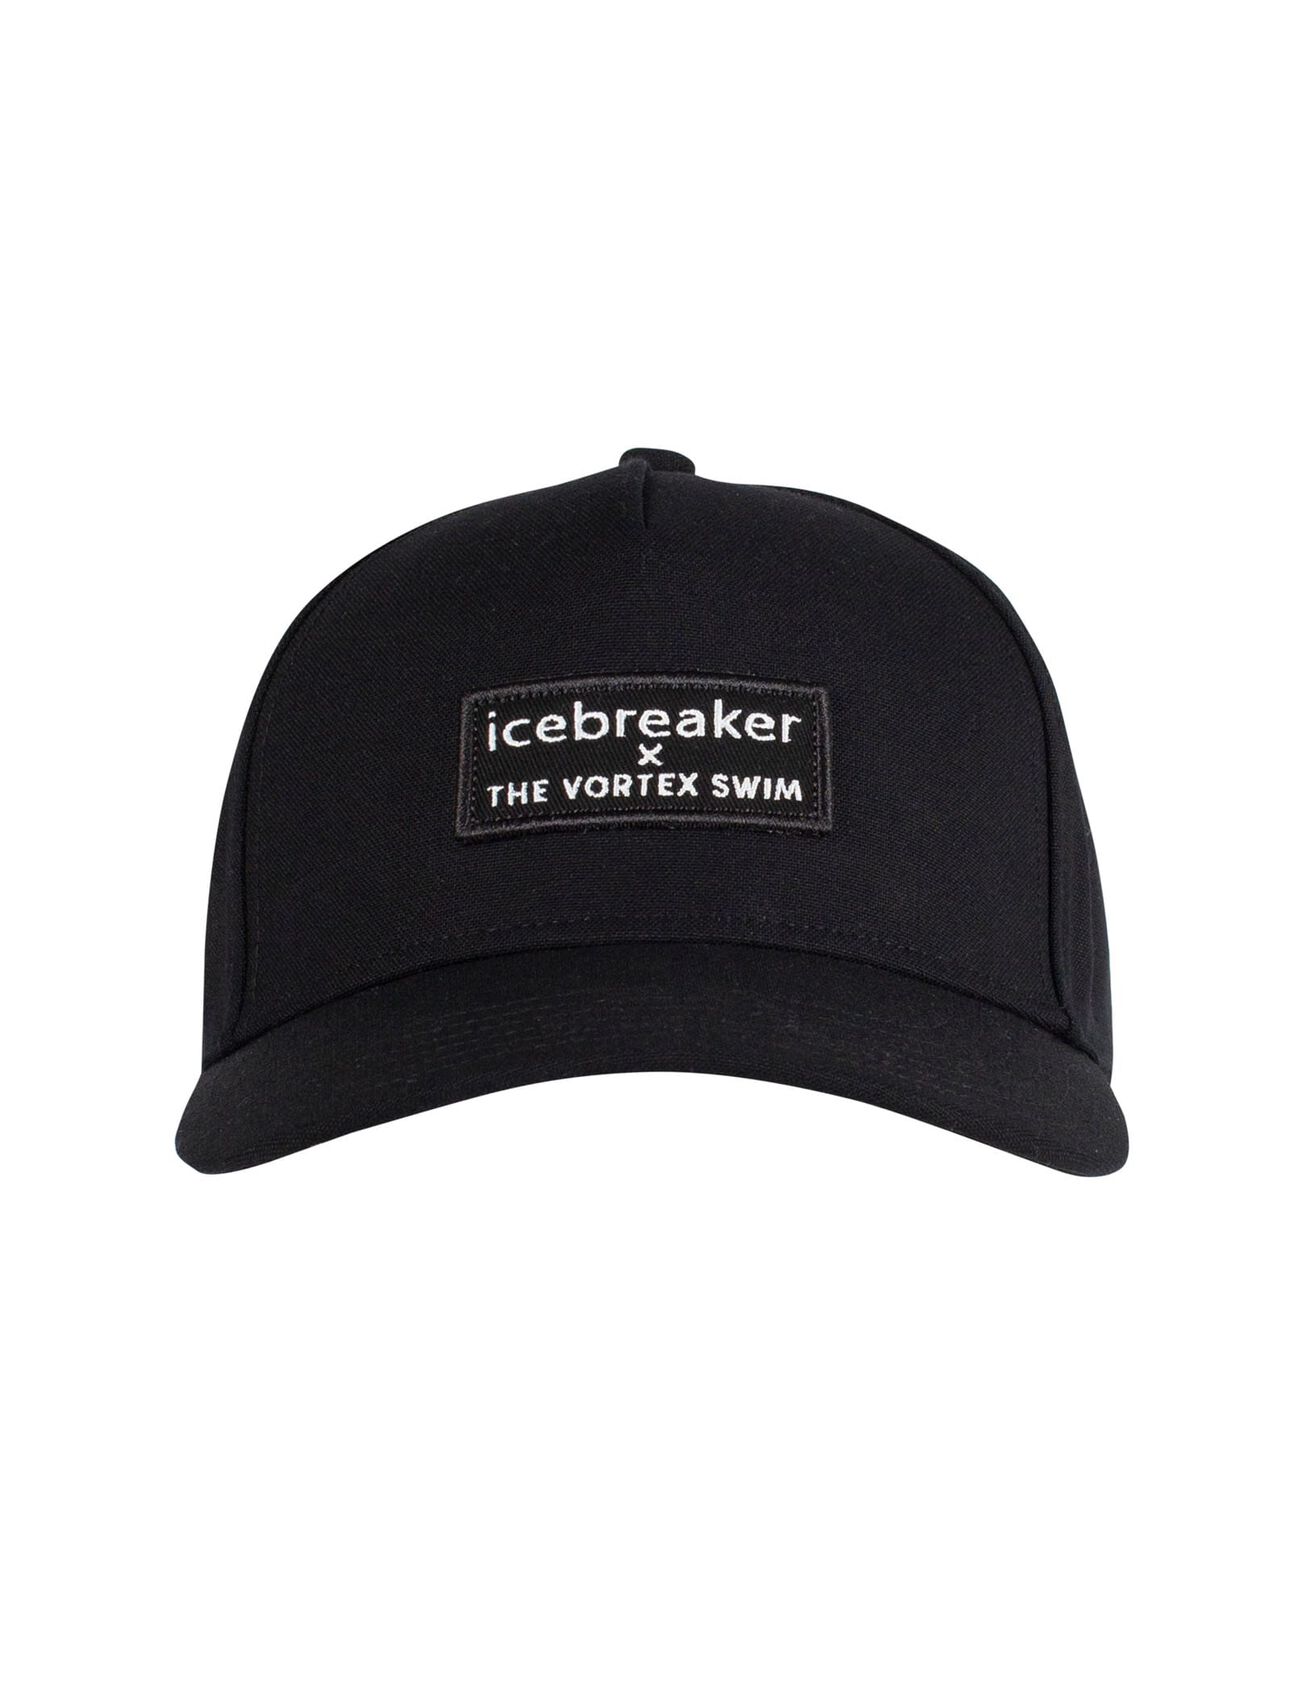 Icebreaker Hat The Vortex Swim